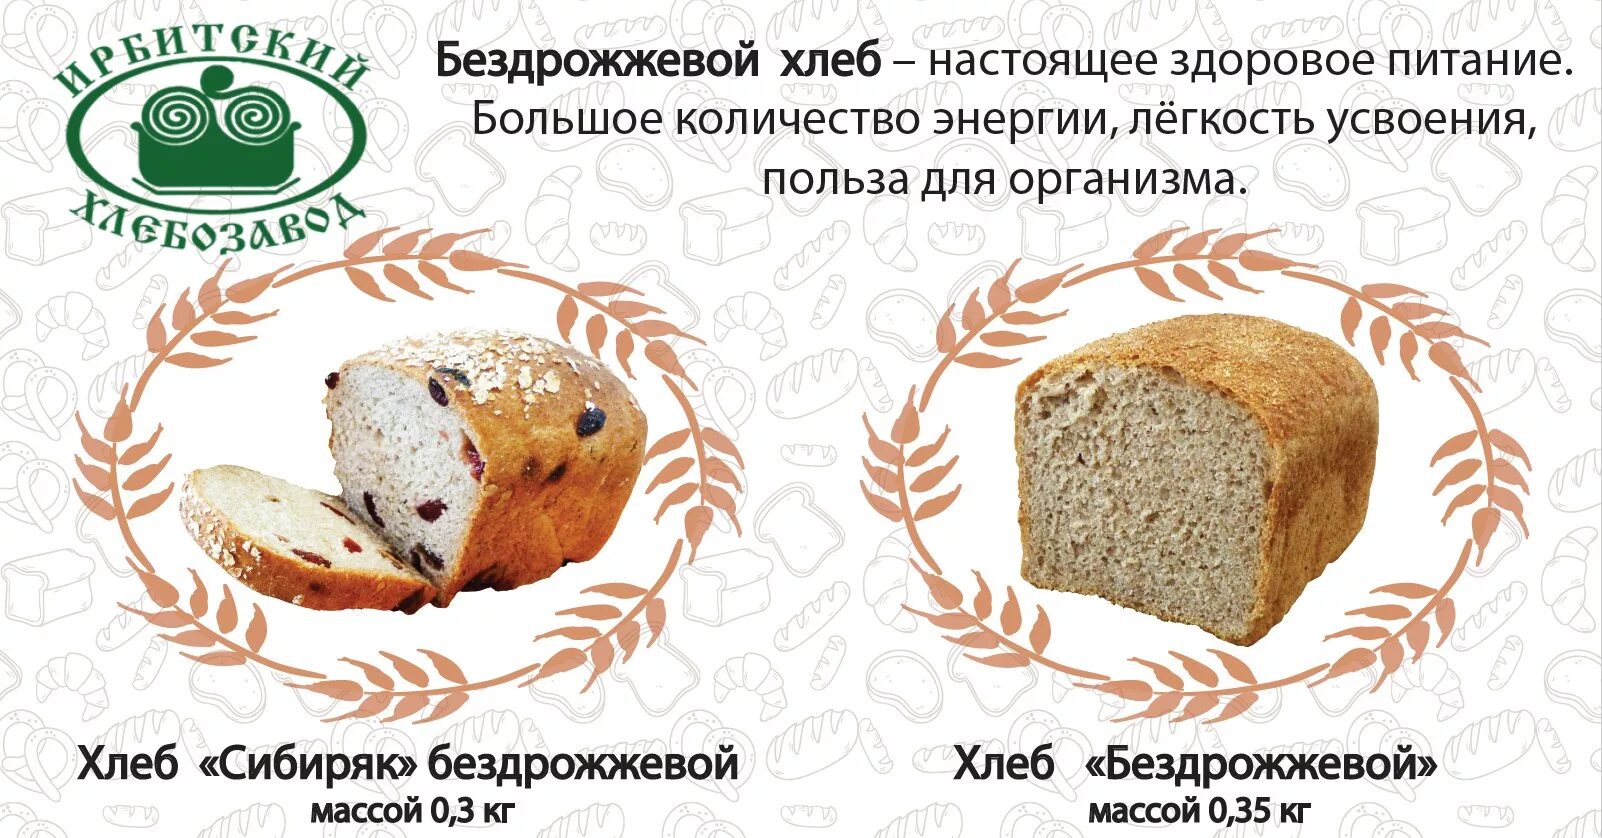 Сколько калорий в бездрожжевом. Бездрожжевой хлеб. Реклама хлеба. Слоганы про хлеб. Реклама бездрожжевого хлеба.